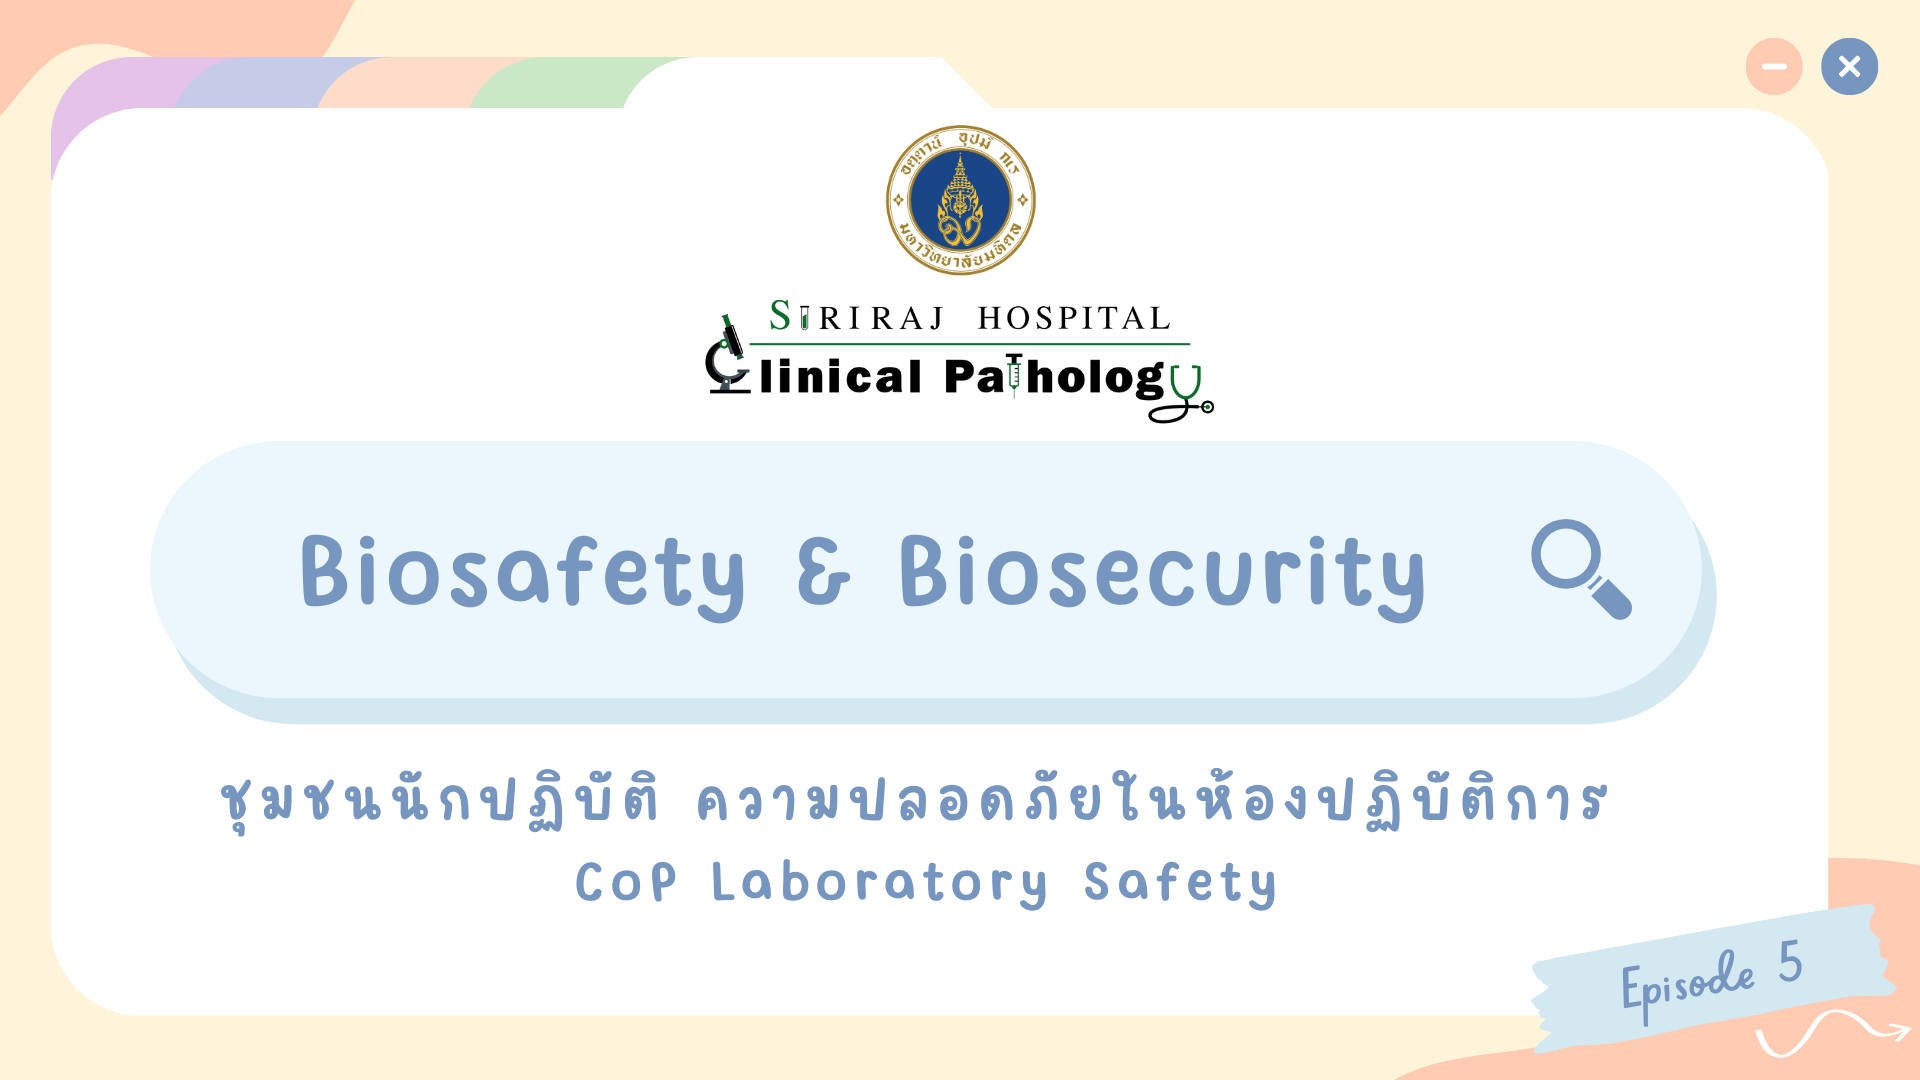 Biosafety & Biosecurity